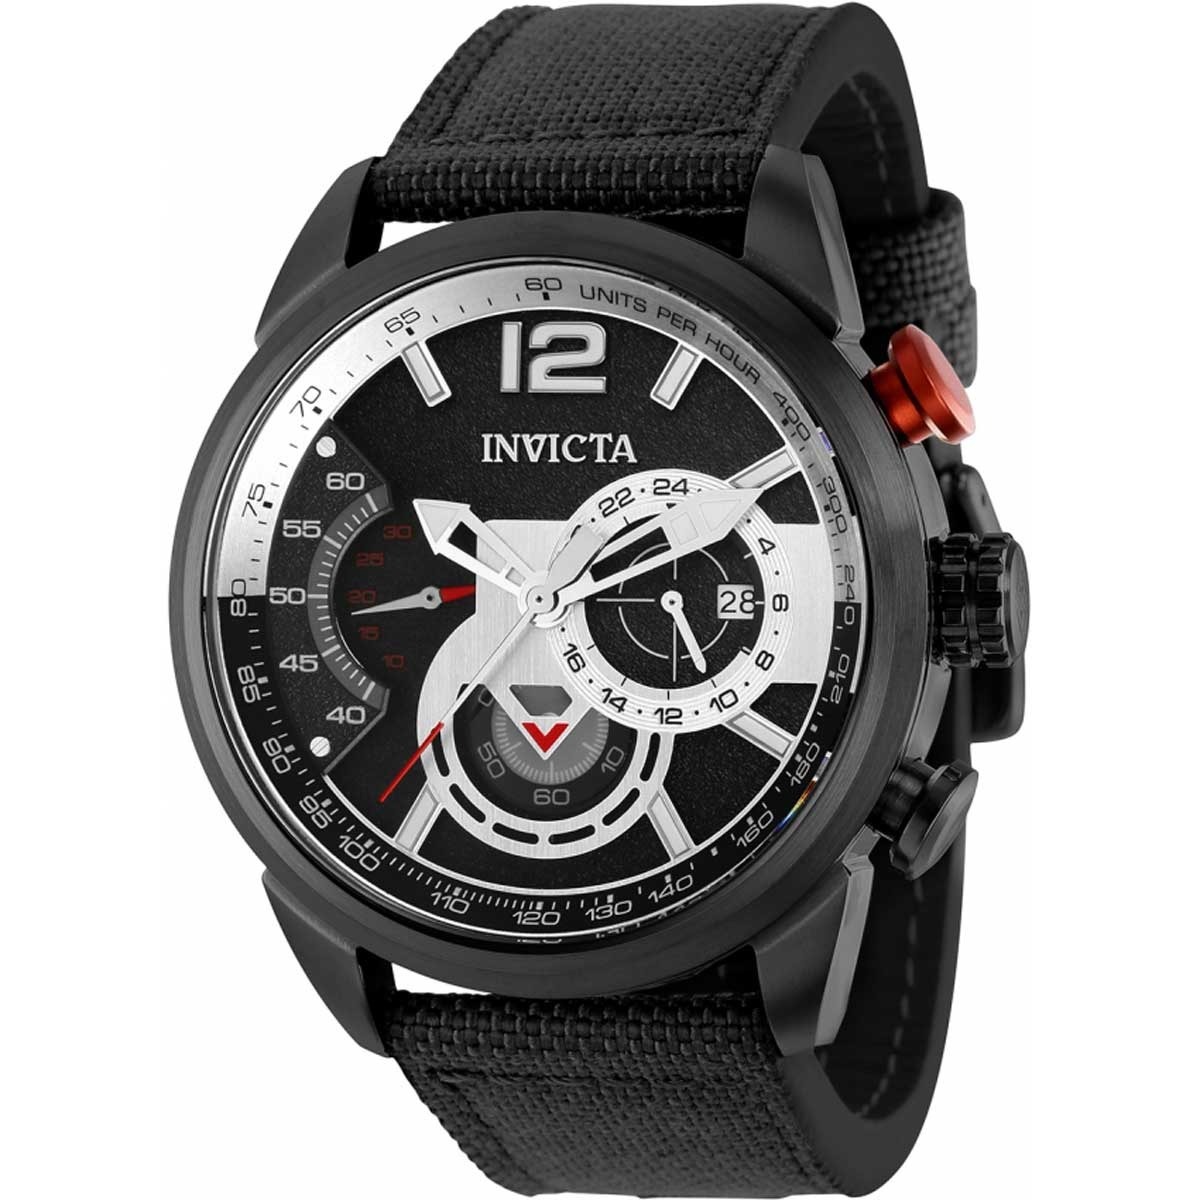 Invicta Men's Watch Black Aviator Quartz Chronograph 39657 for $56 and Free Shipping